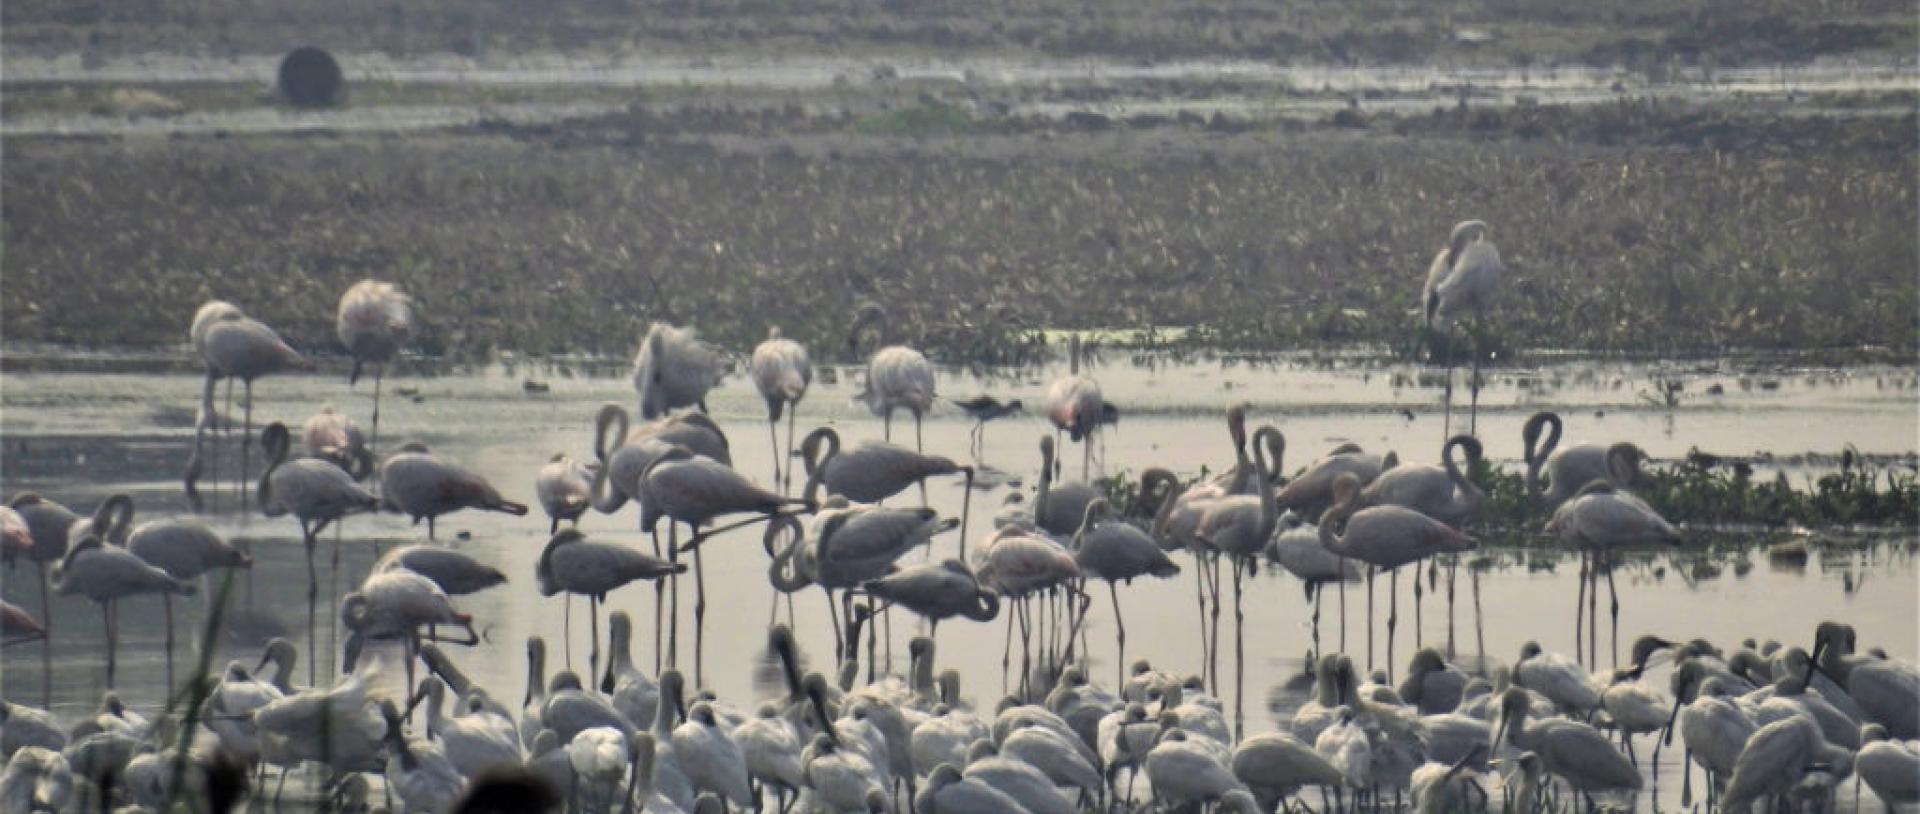 Sarus cranes in Delhi’s Najafgarh wetland [Image by Neha Sinha]